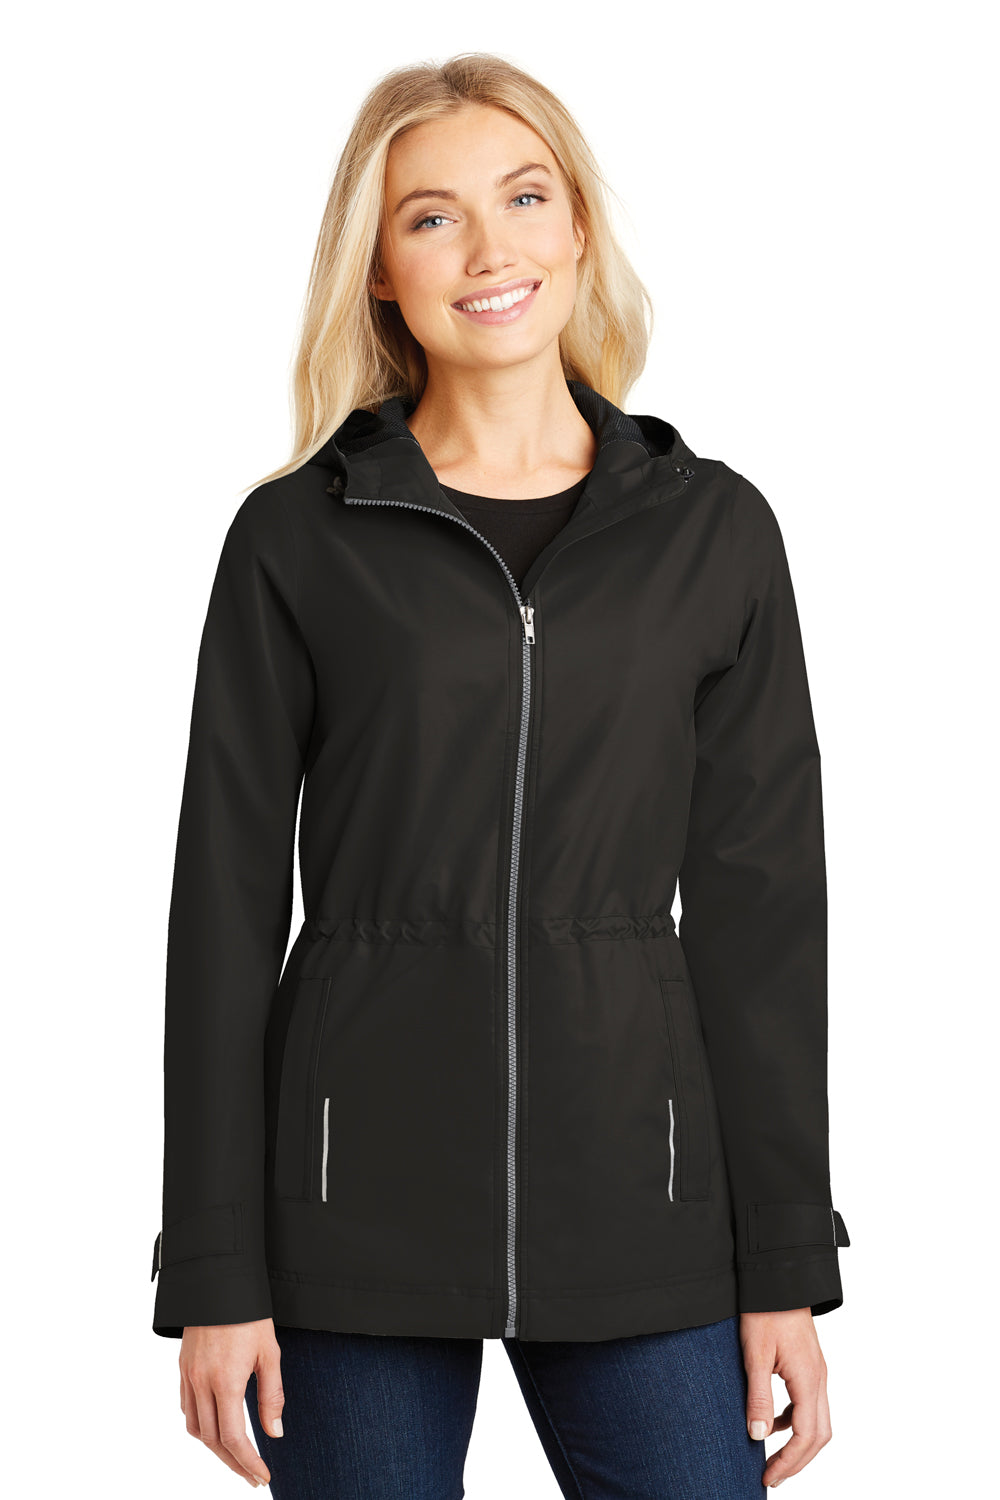 Port Authority L7710 Womens Northwest Slicker Waterproof Full Zip Hooded Jacket Black Front